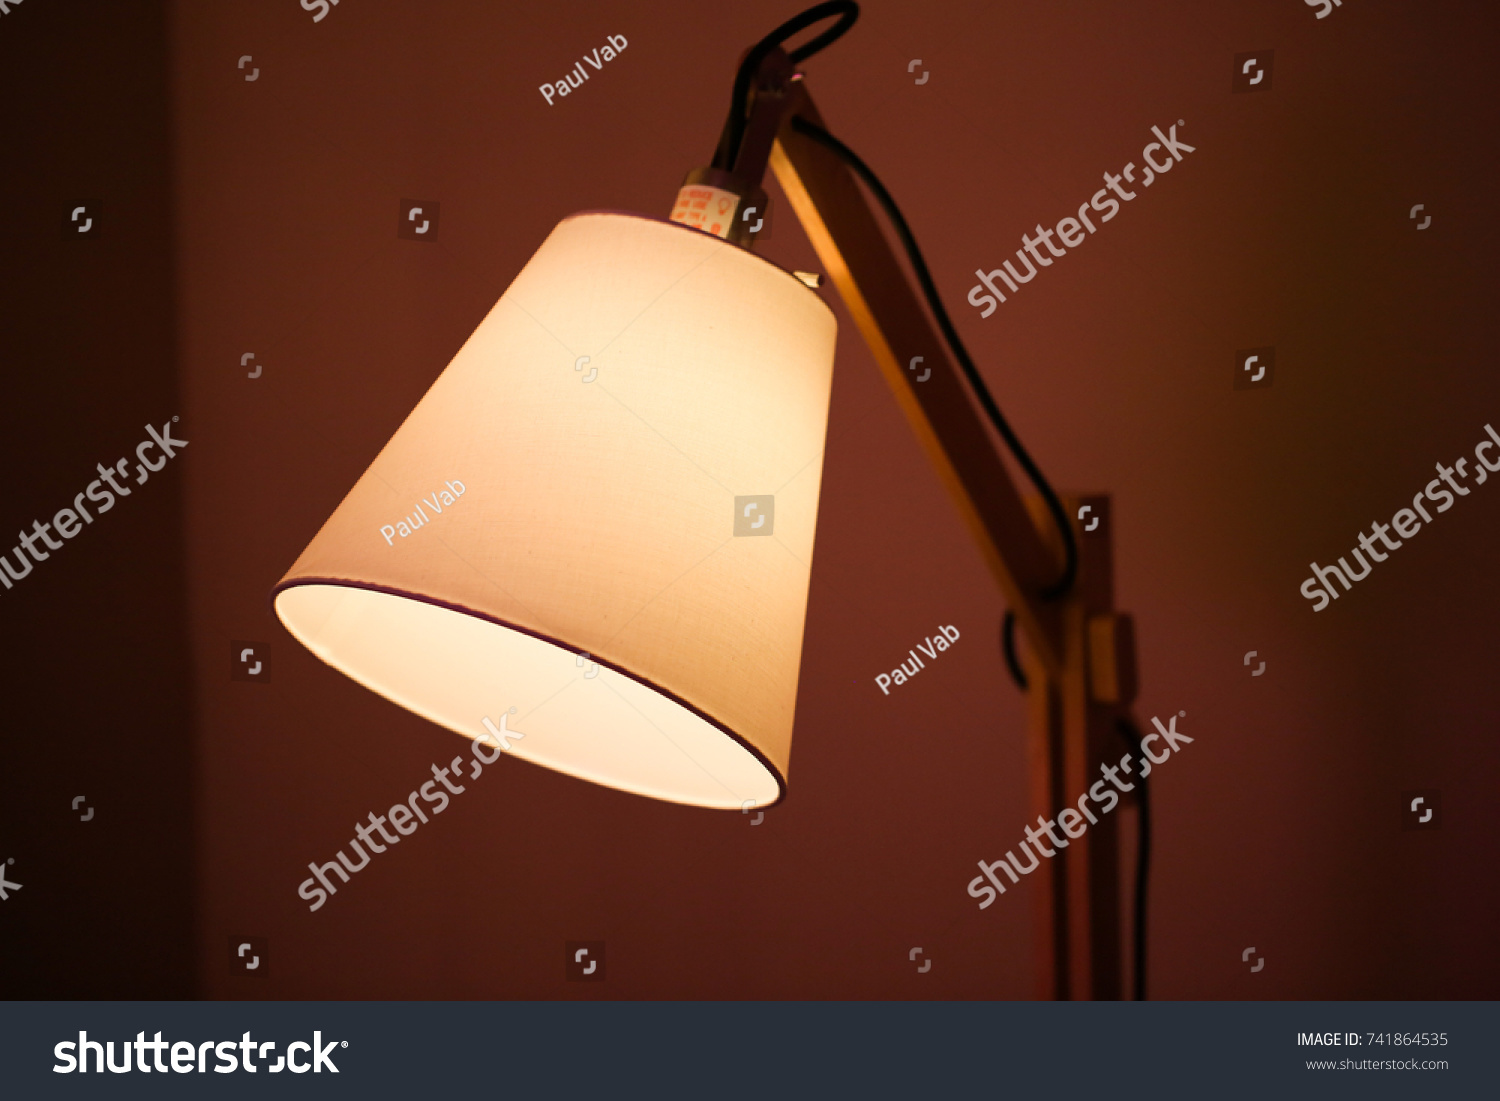 Warm lighted lamp shade